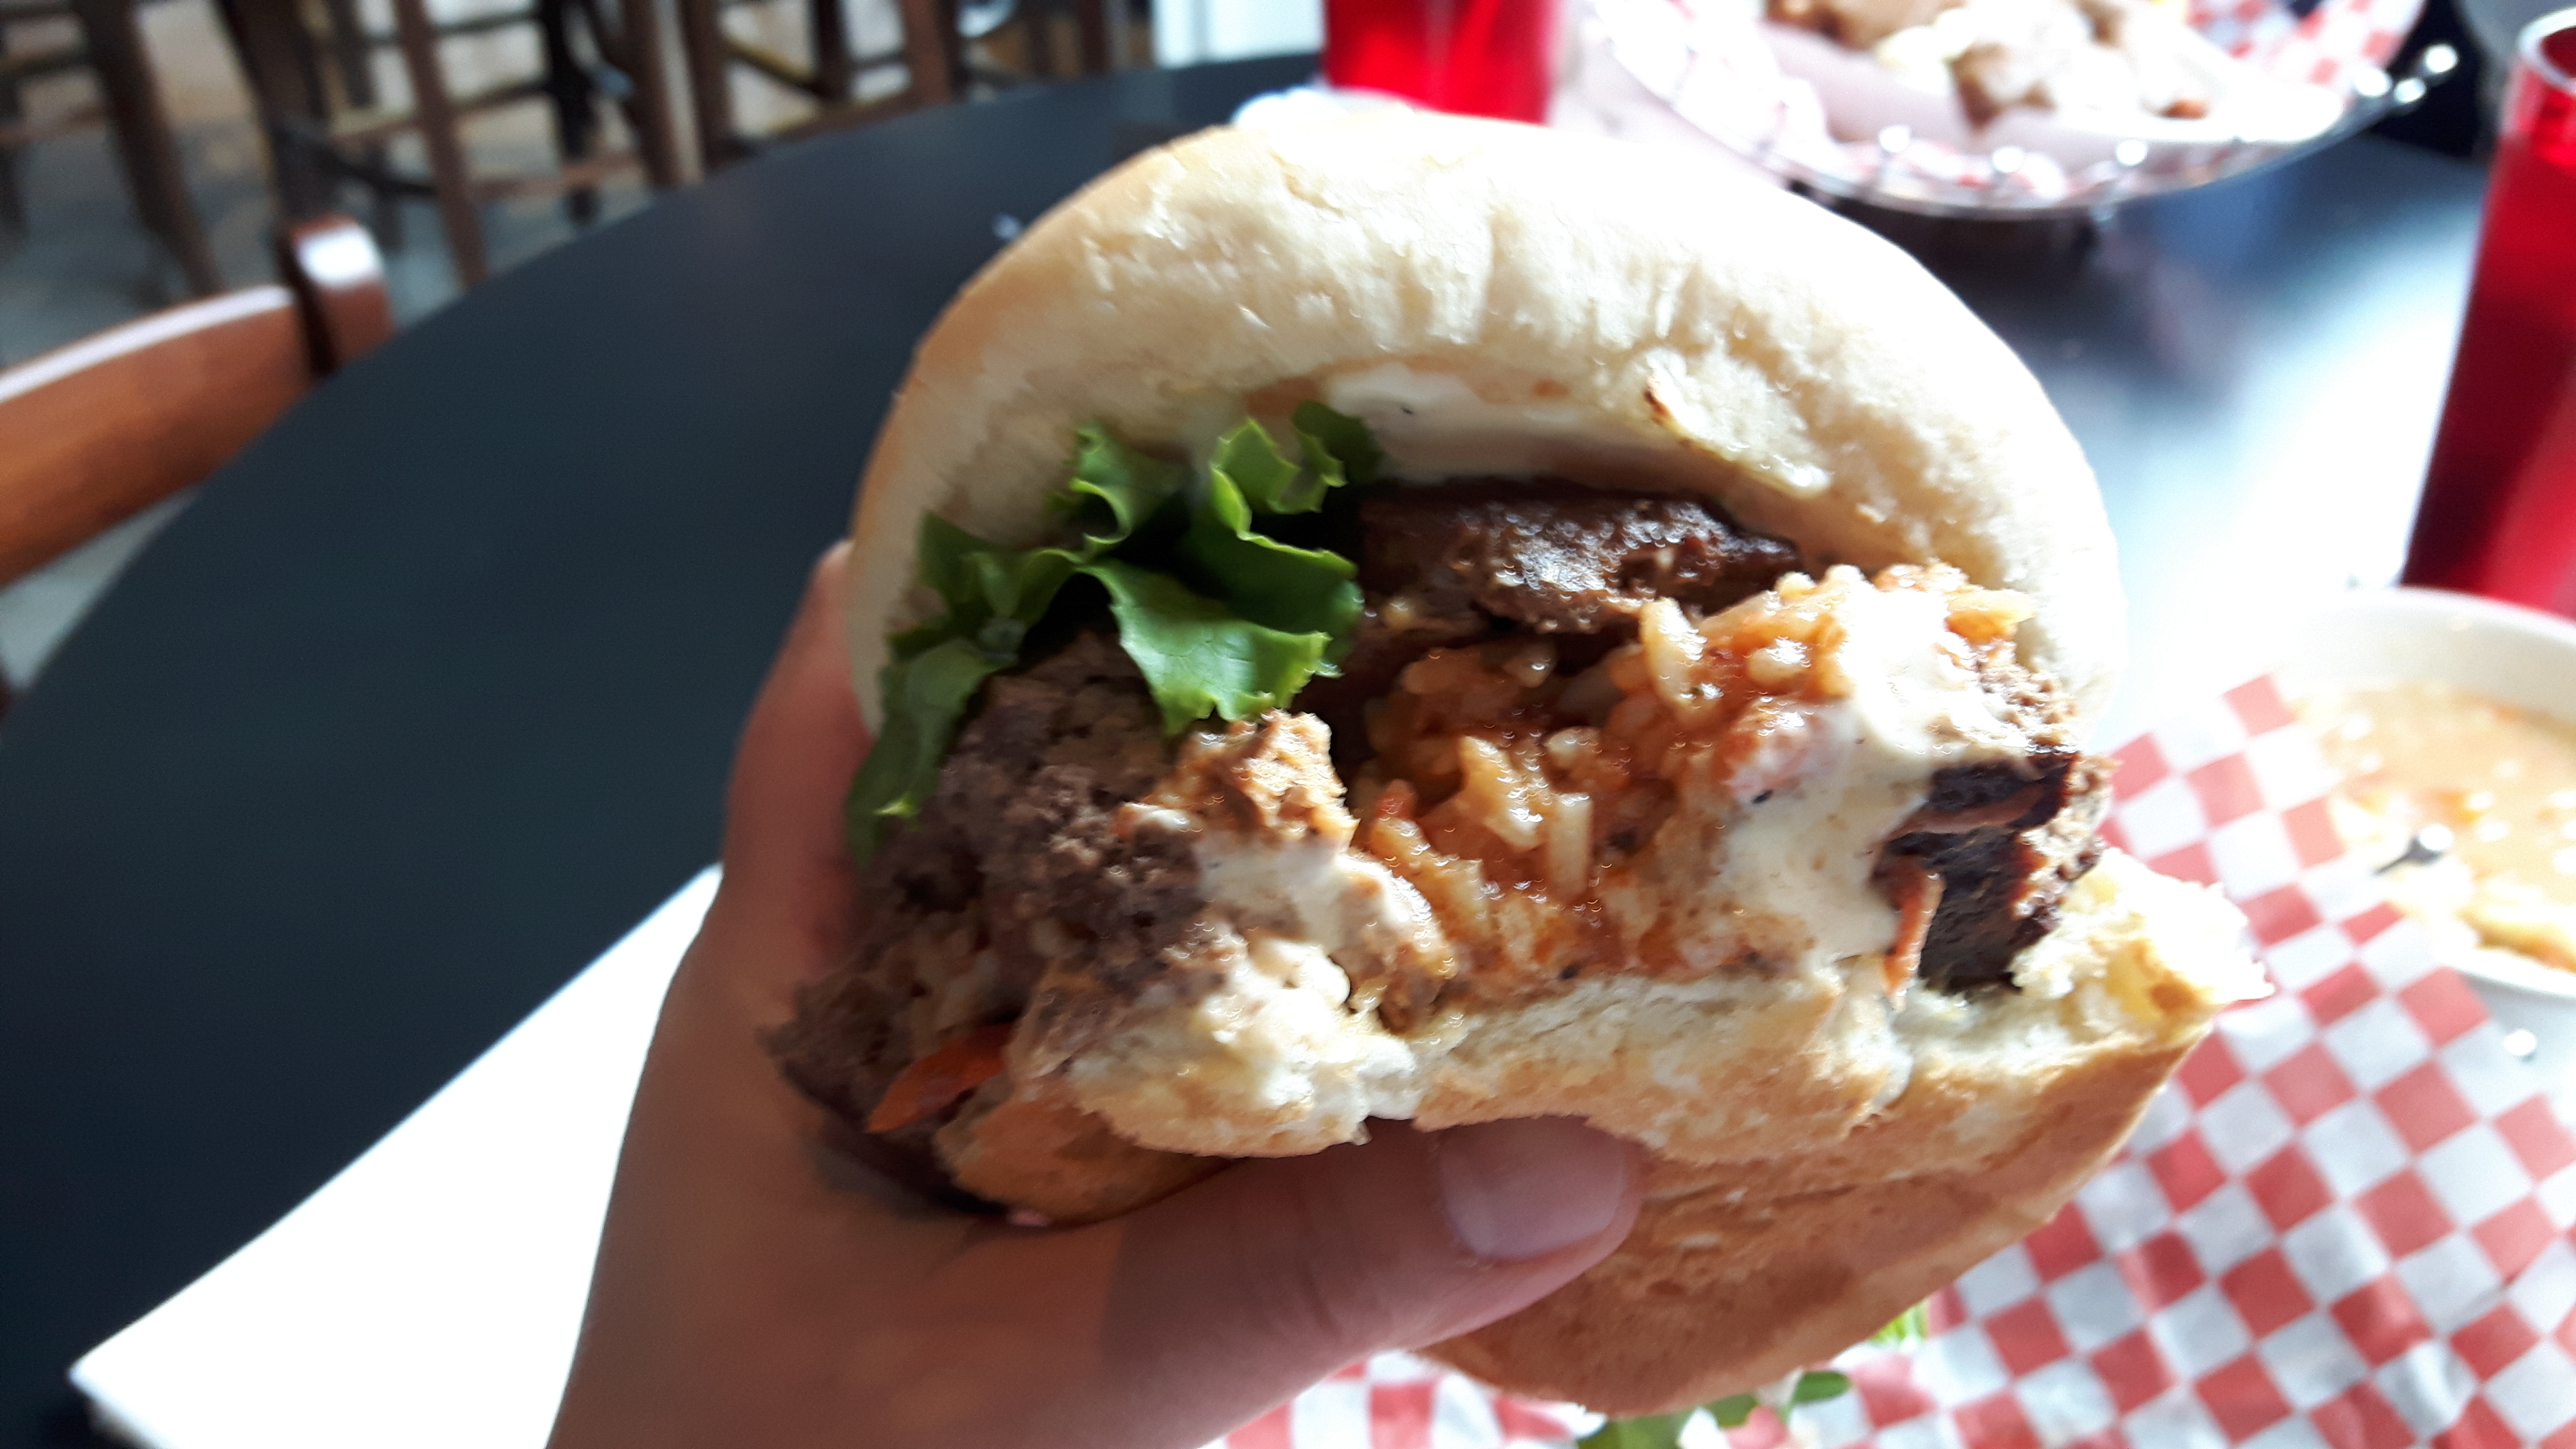 Second bite of the stuffed jambalaya burger